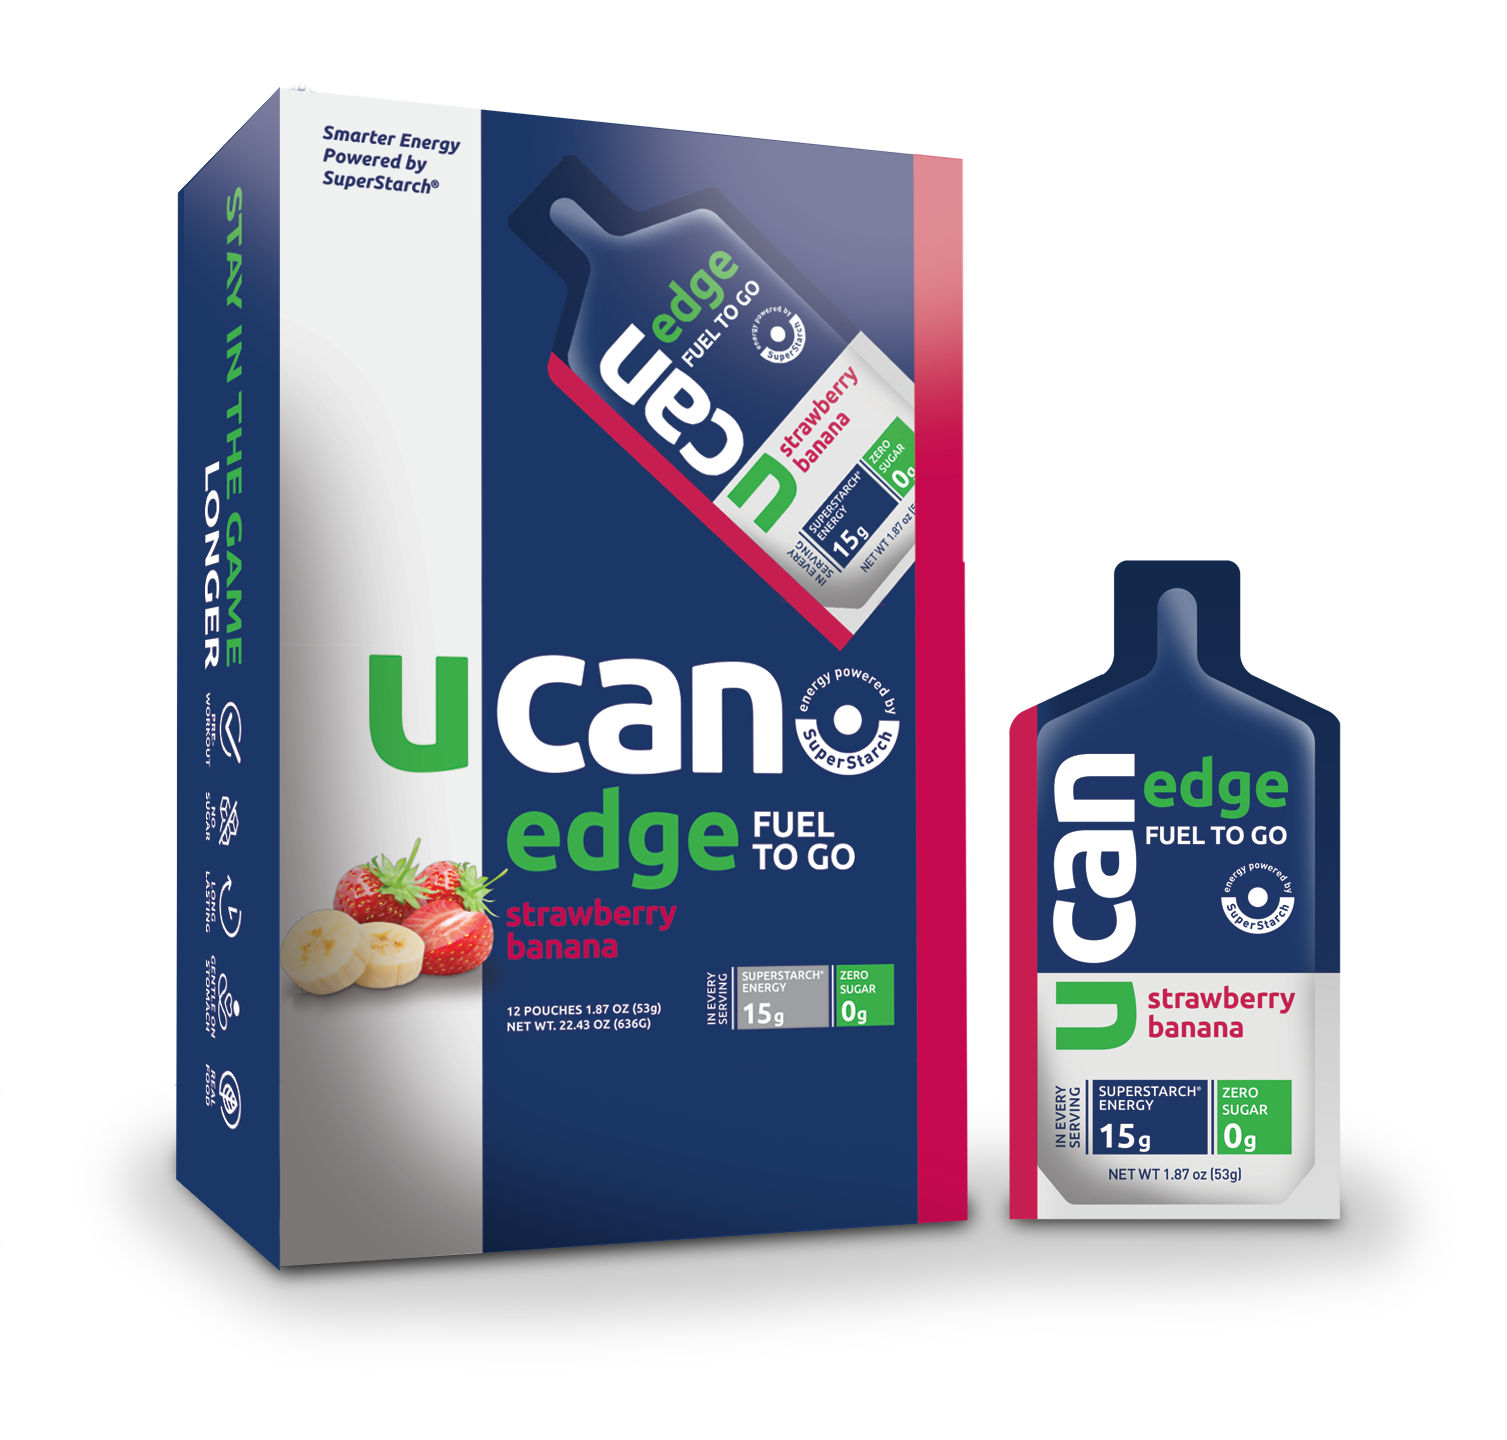 UCAN Edge Fuel to Go (Gel) - Strawberry Banana 6 innerpacks per case 22.5 oz